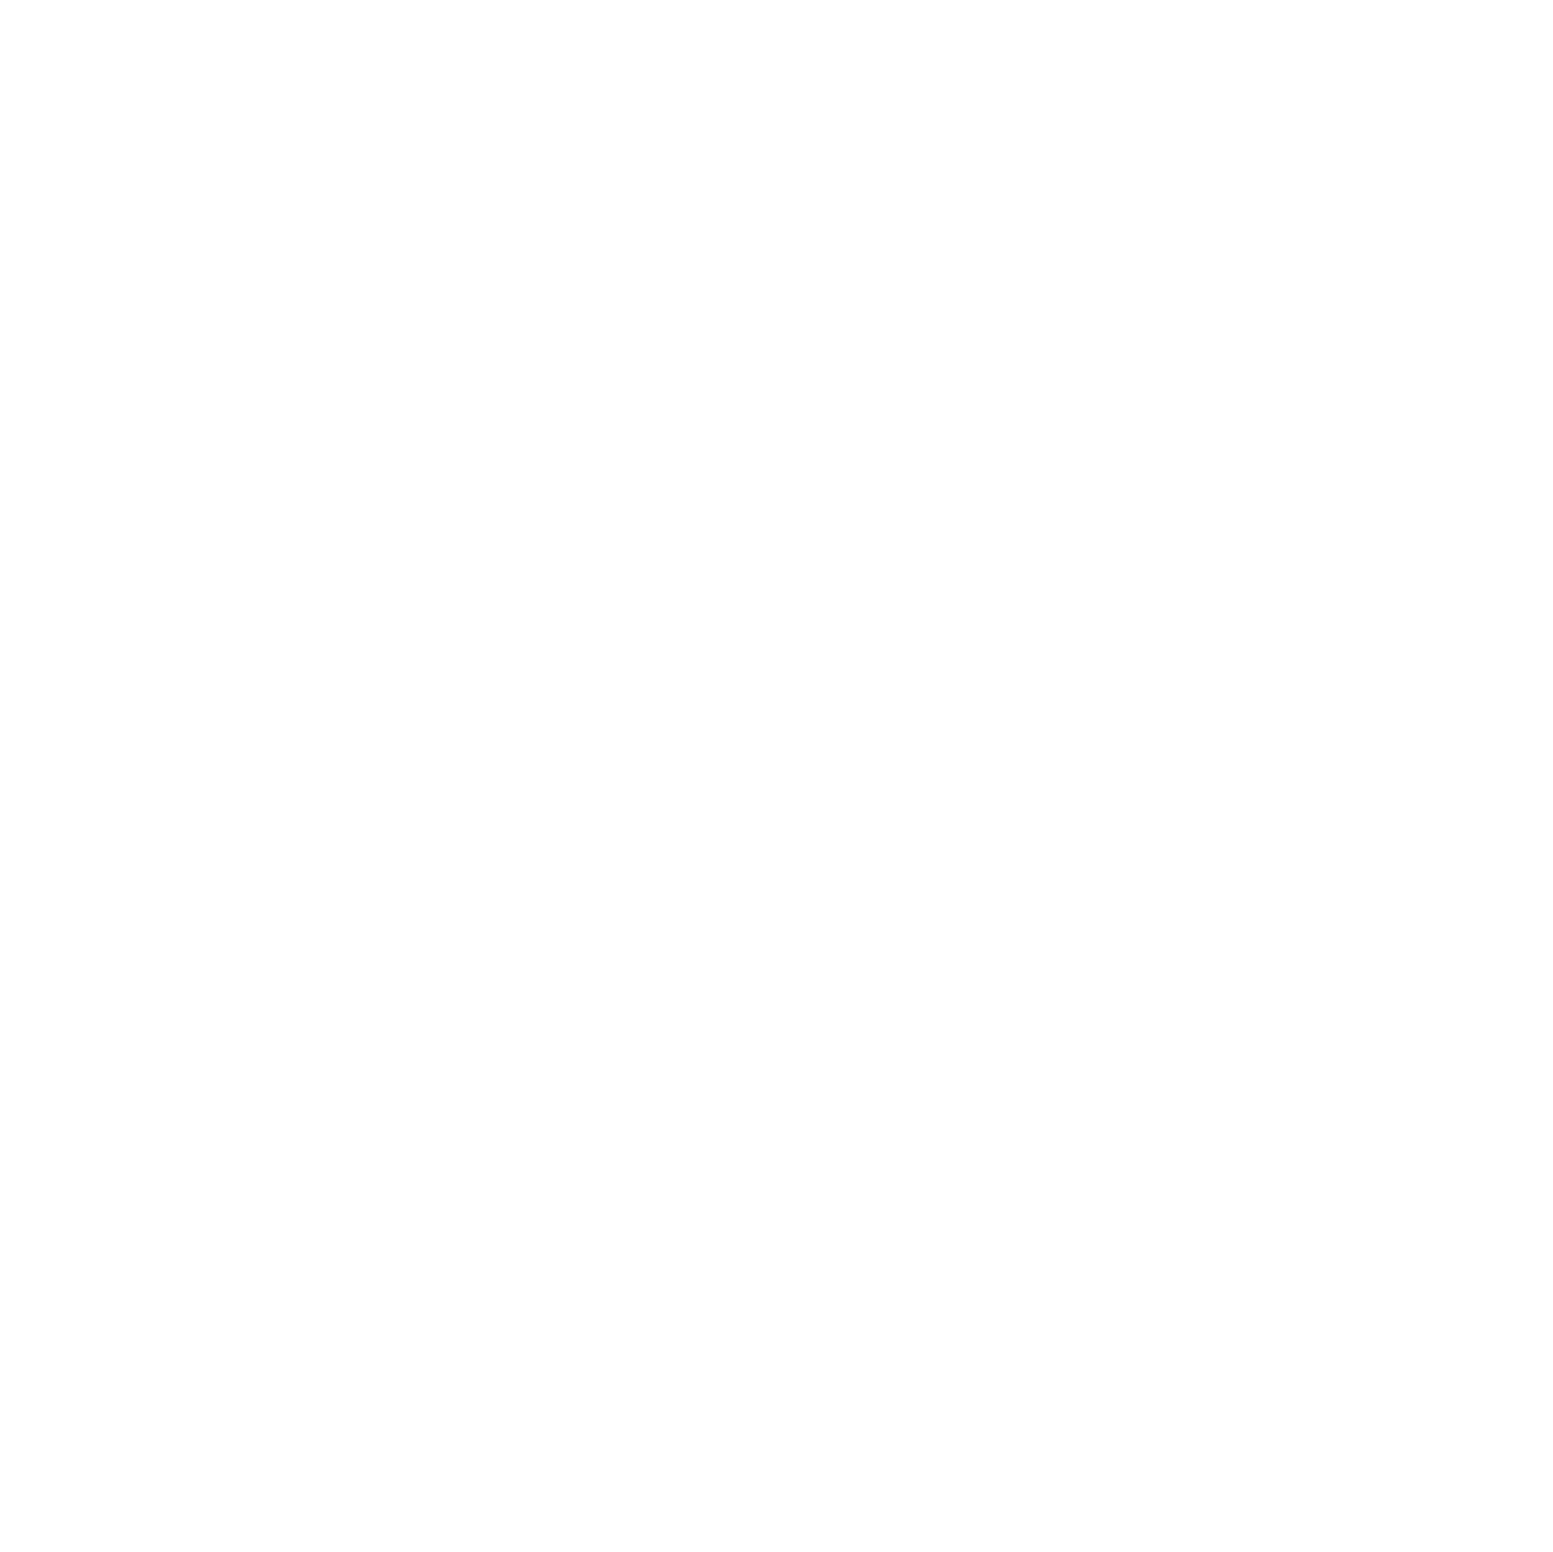 USANA logo for dark backgrounds (transparent PNG)